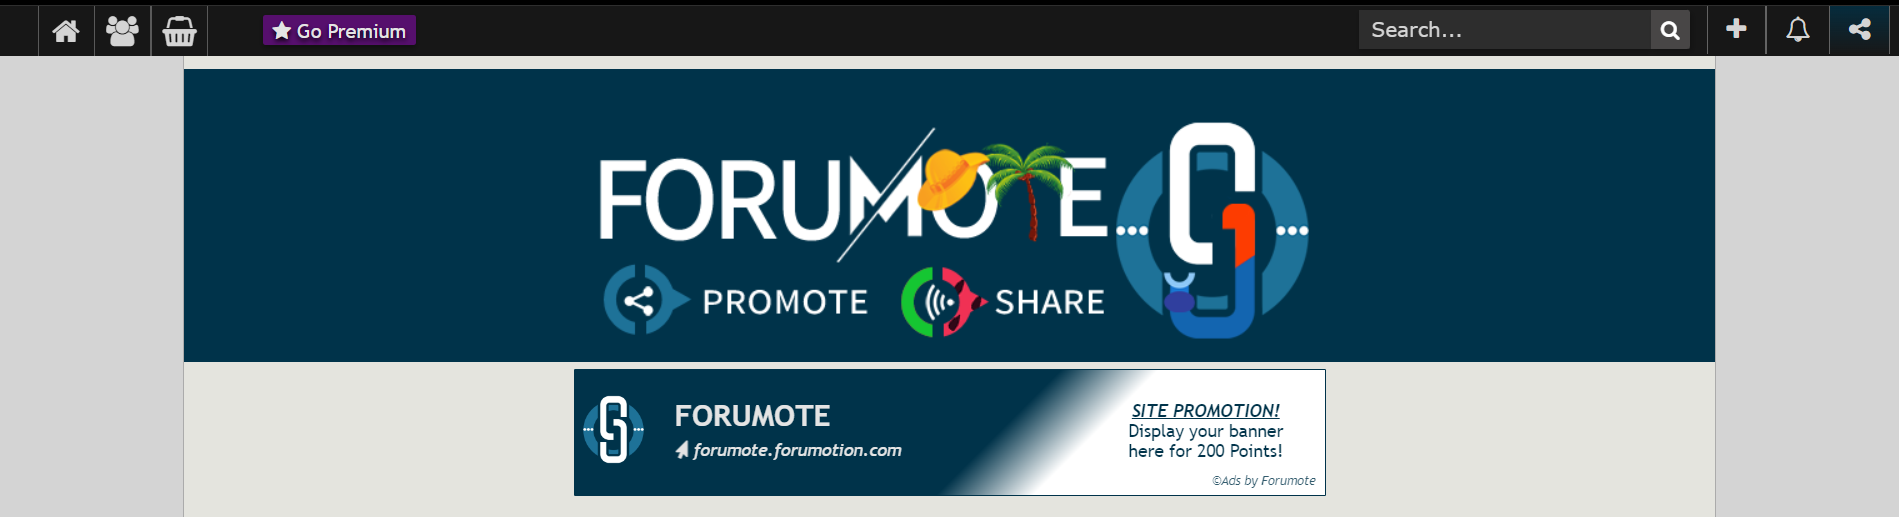 Forumote - Site Promotion Screen16